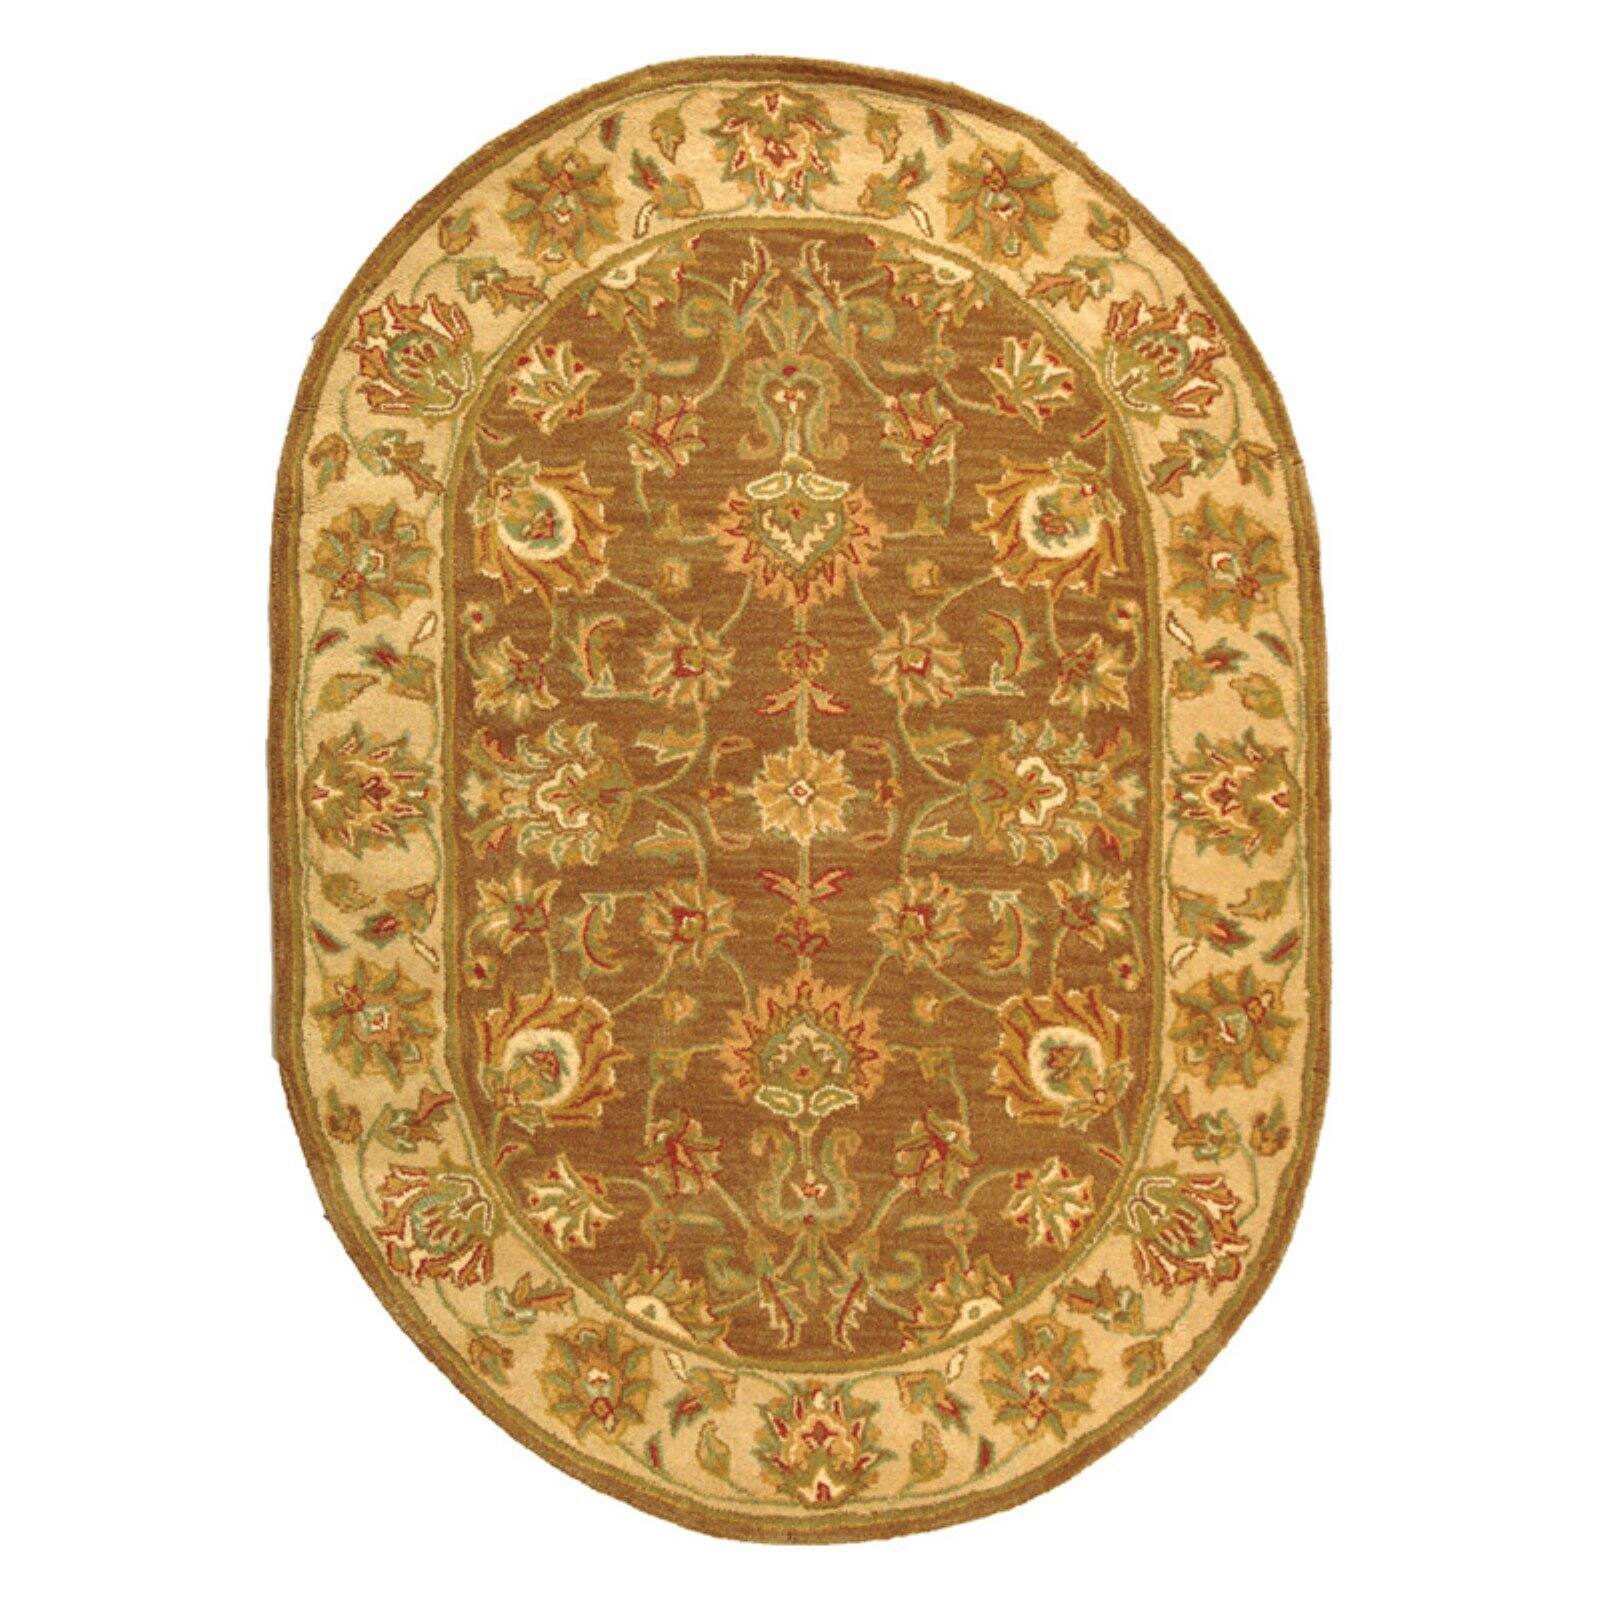 SAFAVIEH Heritage Regis Traditional Wool Area Rug, Brown/Ivory, 6' x 6' Round - image 5 of 9